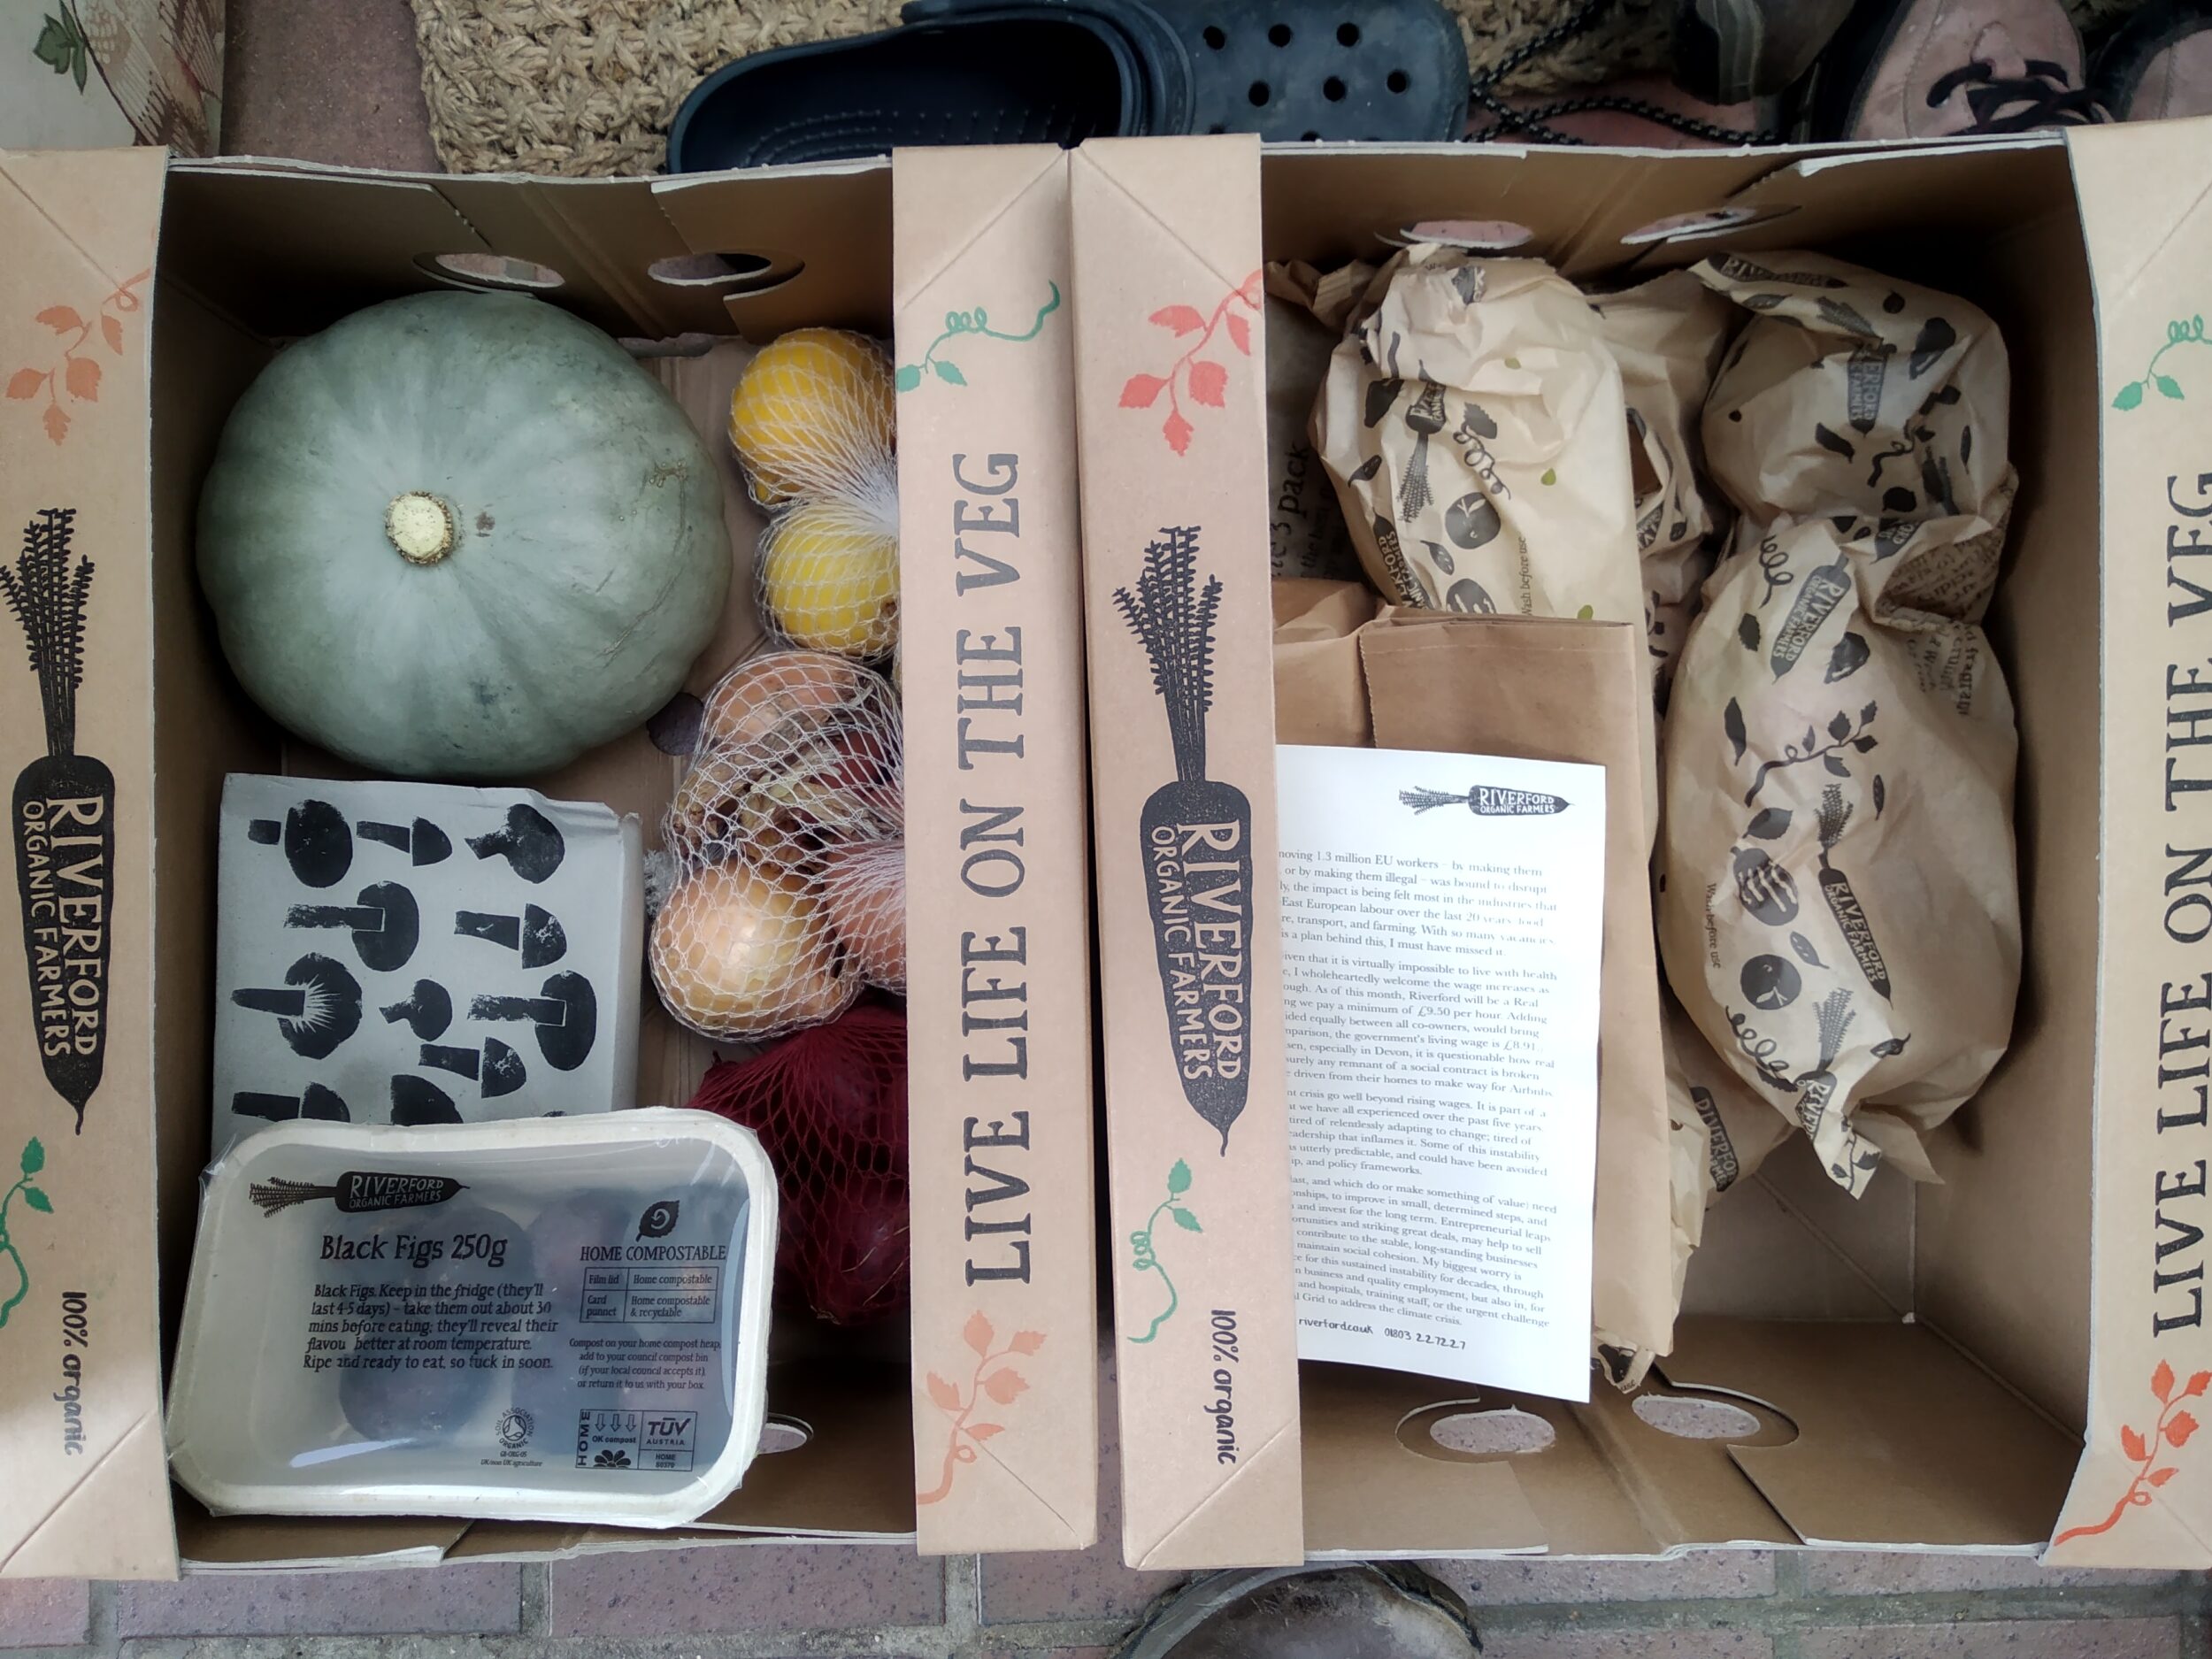 riverford organic veg box